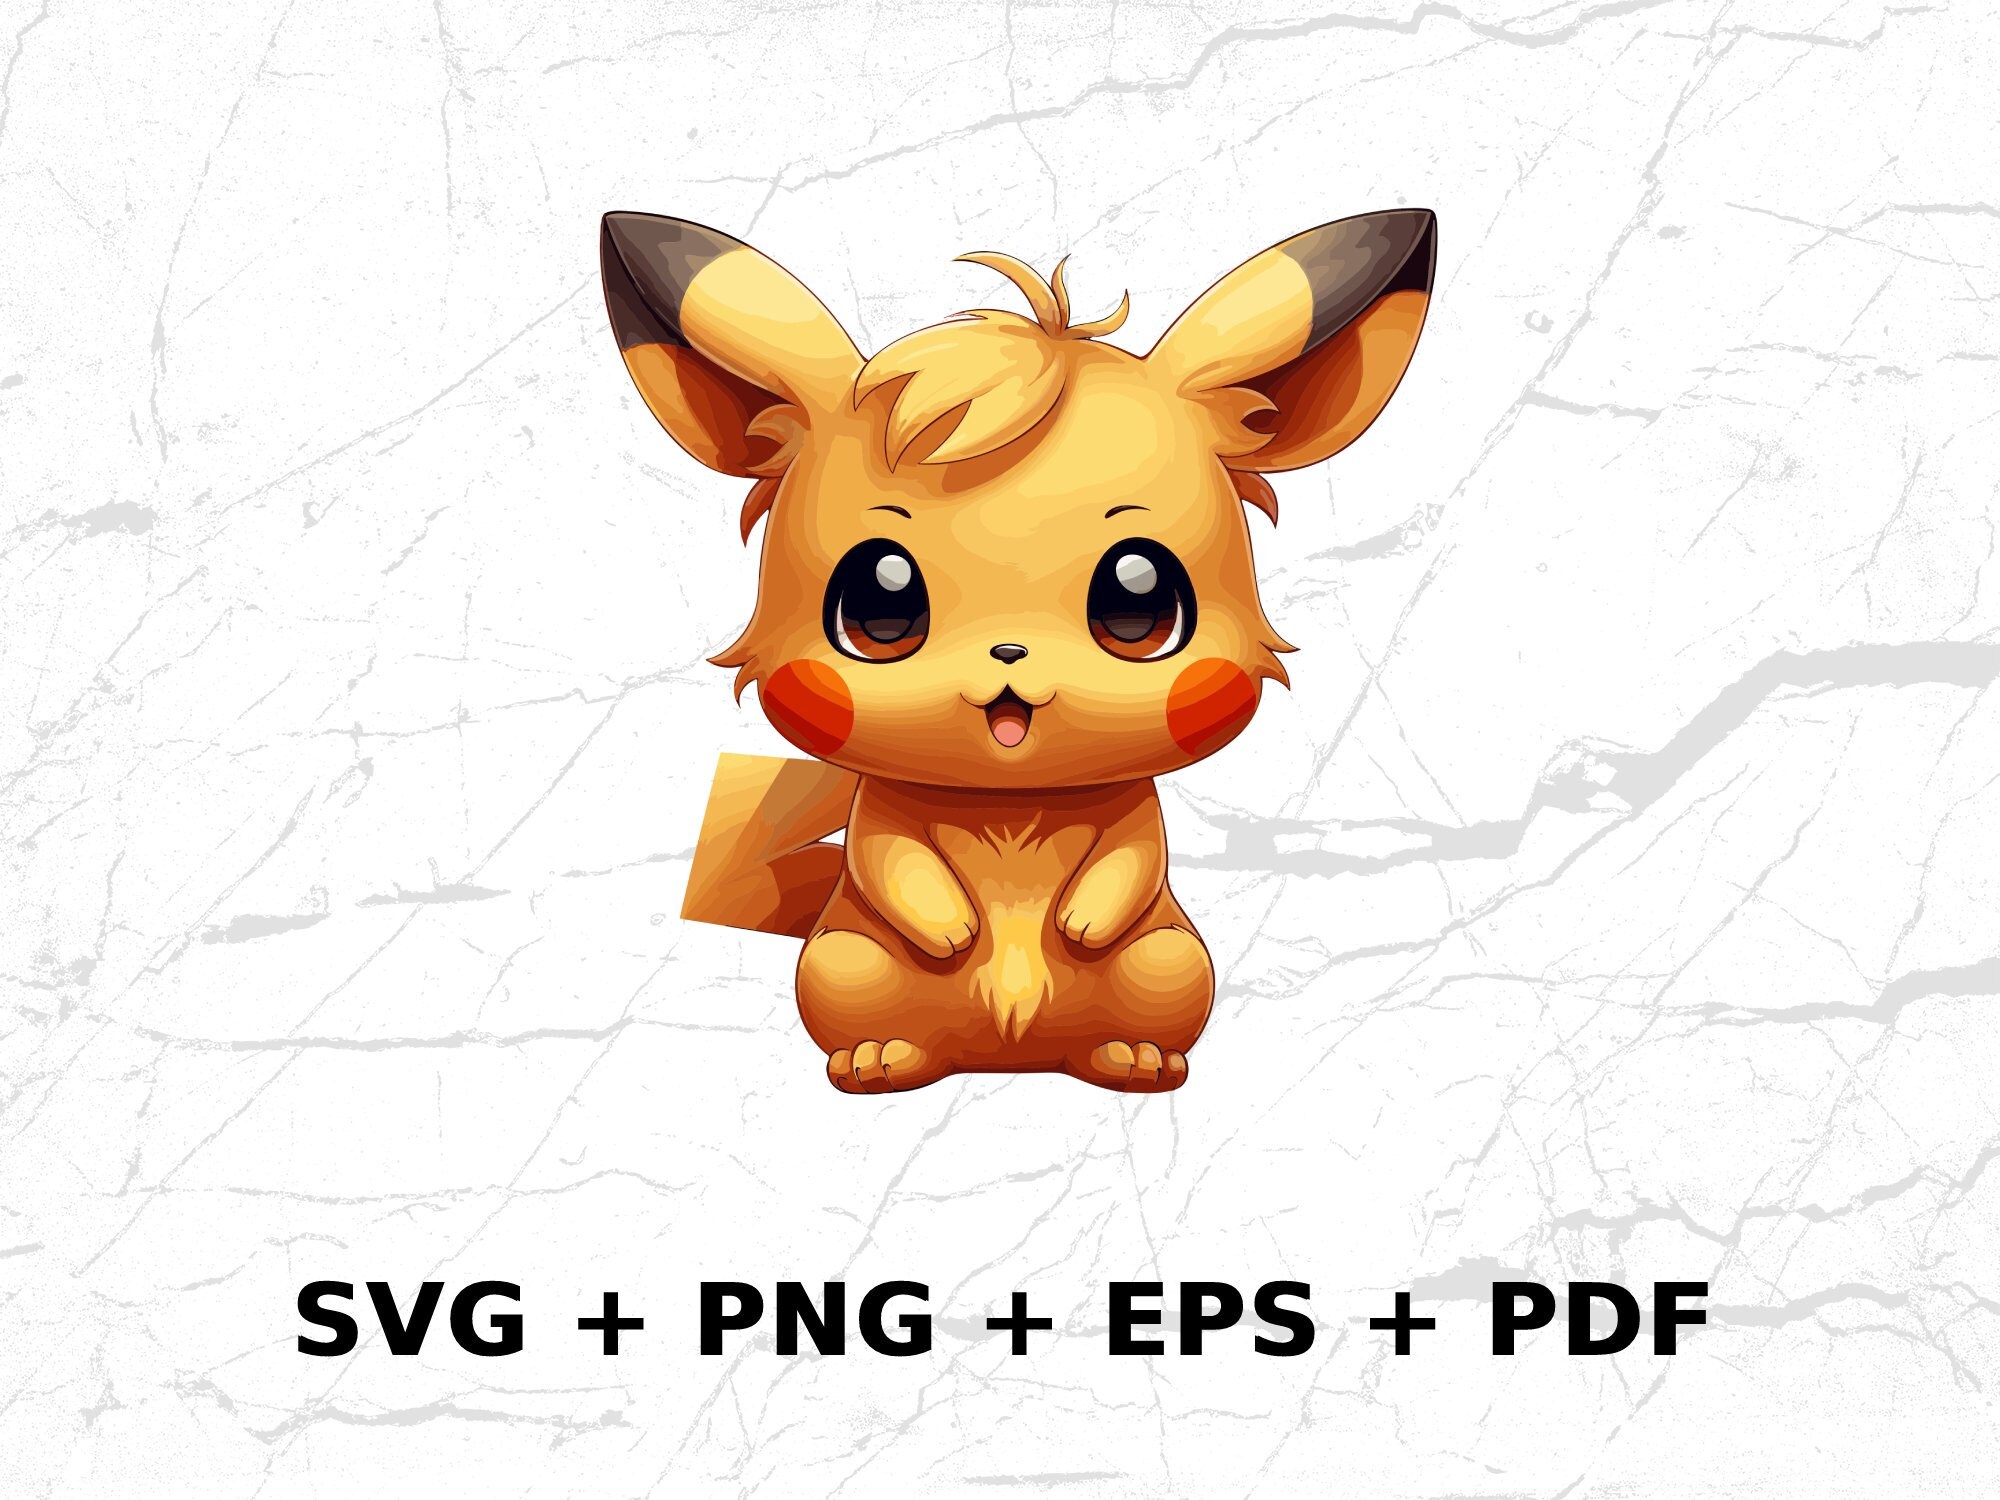 Cute Pokemon Pokeball Cartoon Movie SVG PNG - Inspire Uplift